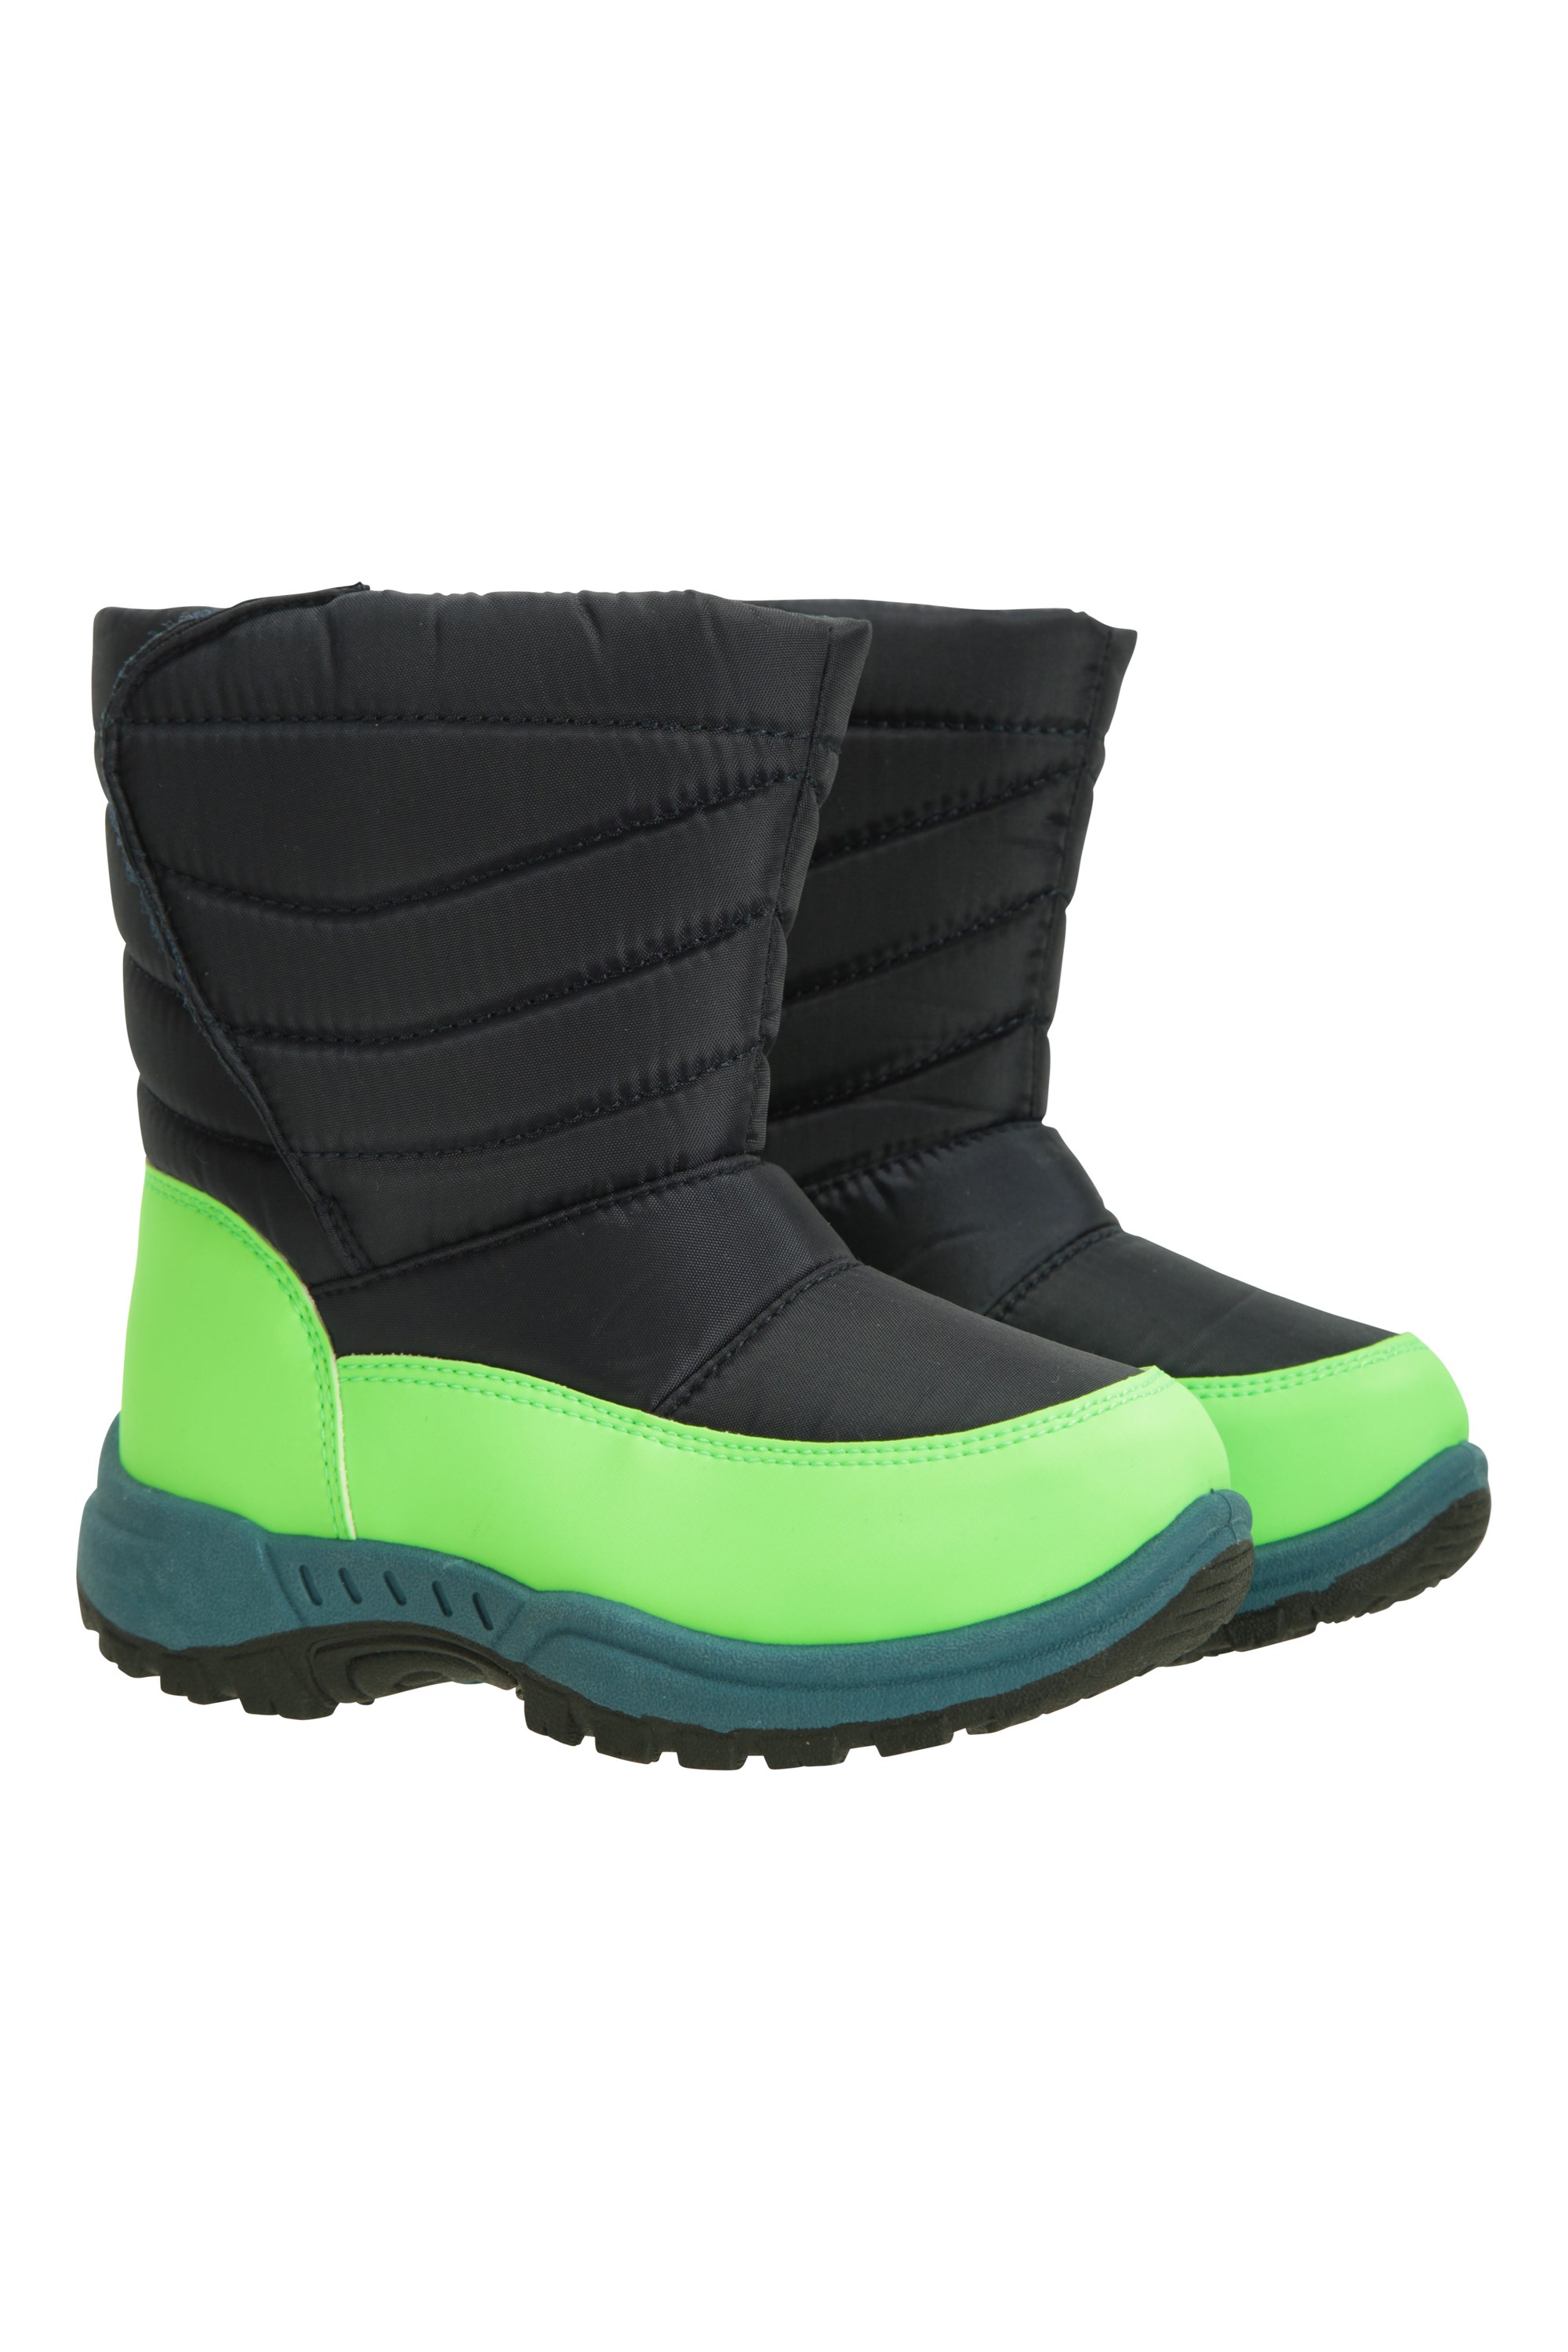 Mountain Warehouse Rapid Kids Waterproof Boots for Girls & Boys Lime Kids Shoe Size 2 US 